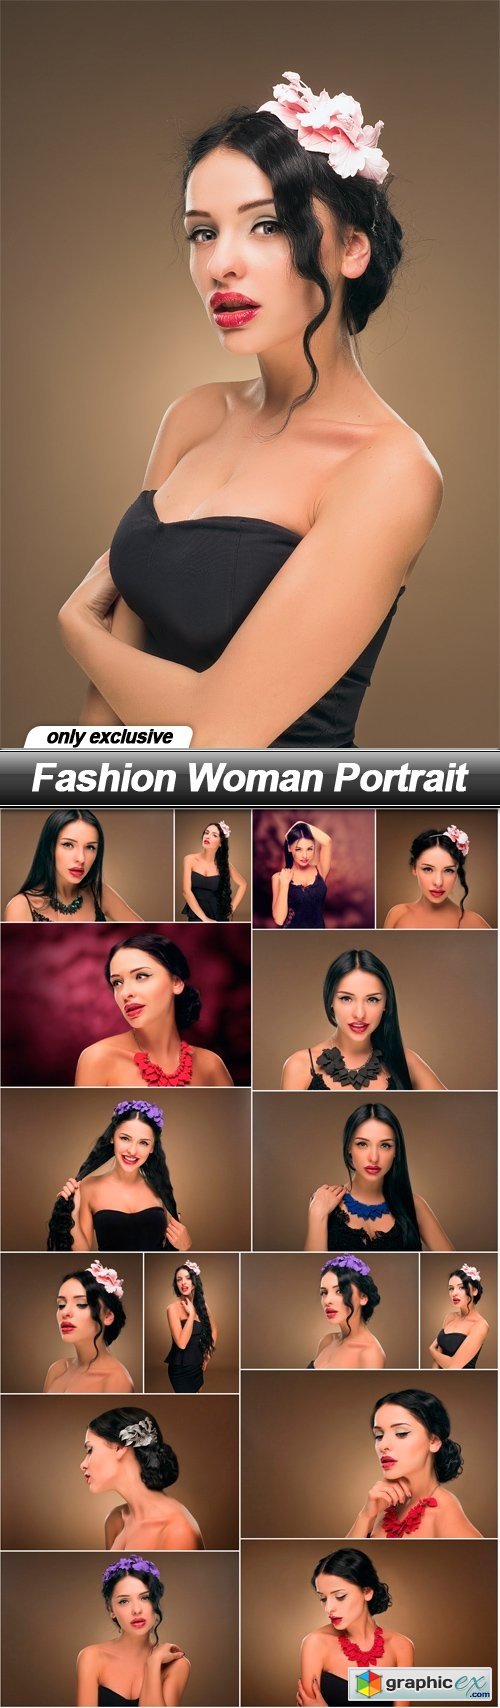 Fashion Woman Portrait - 16 UHQ JPEG